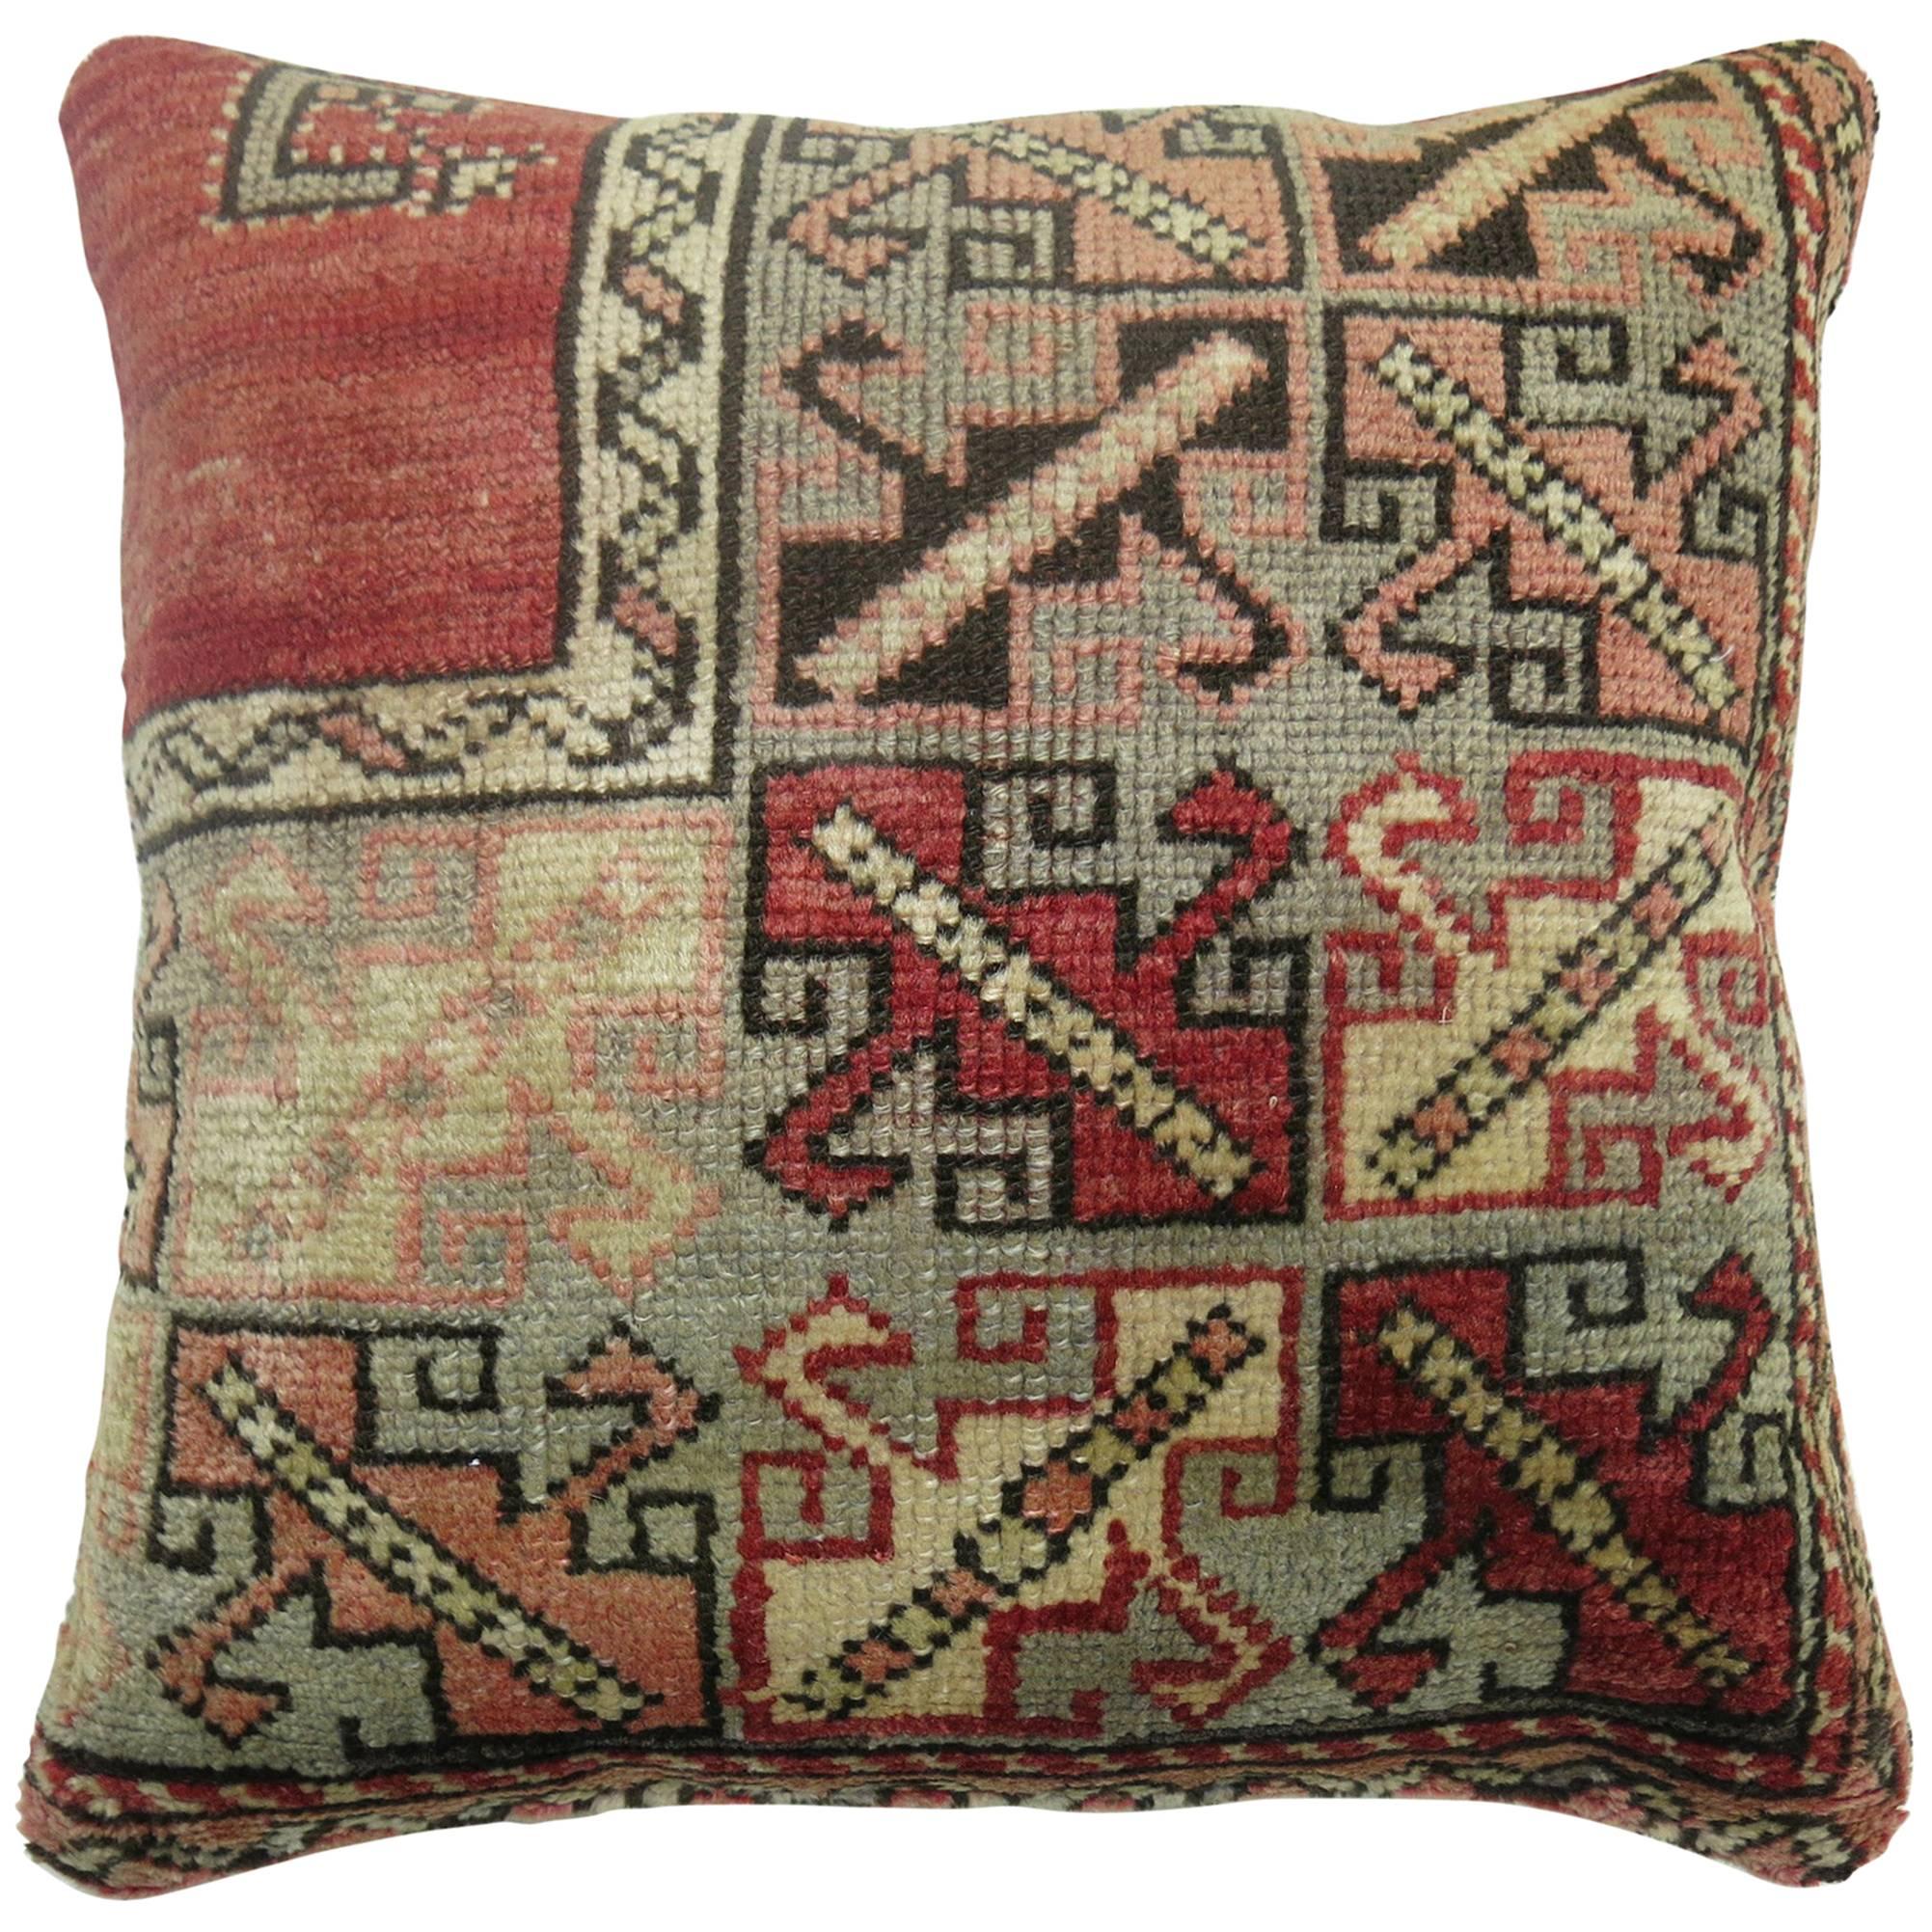 Large Square Red Vintage Turkish Rug Pillow